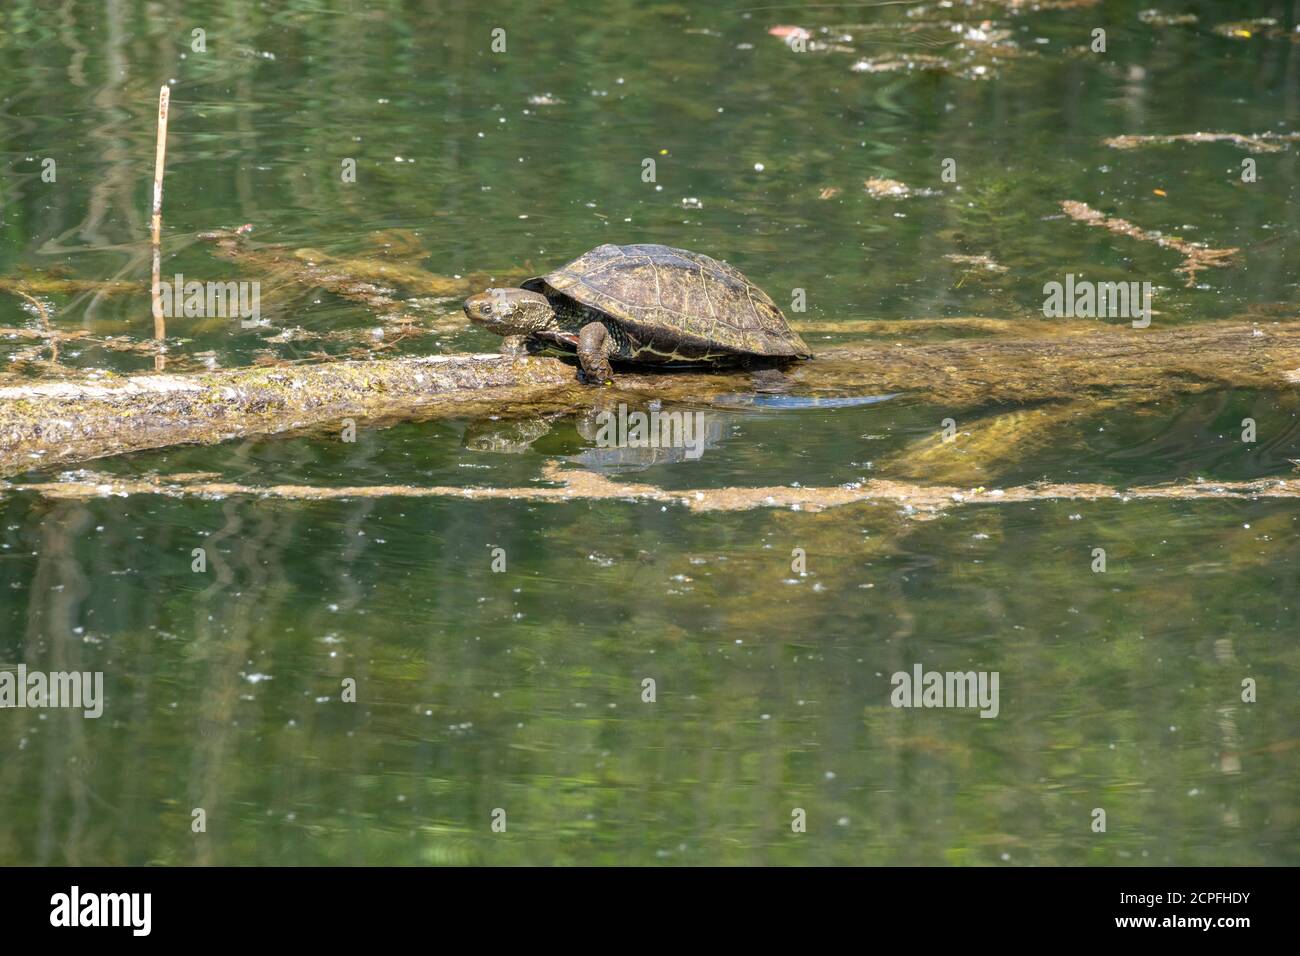 Germany, Baden-Württemberg, Karlsruhe, Oberwaldsee. Turtles, Testudinata, or Testudines. European pond turtle (Emys orbicularis). Stock Photo